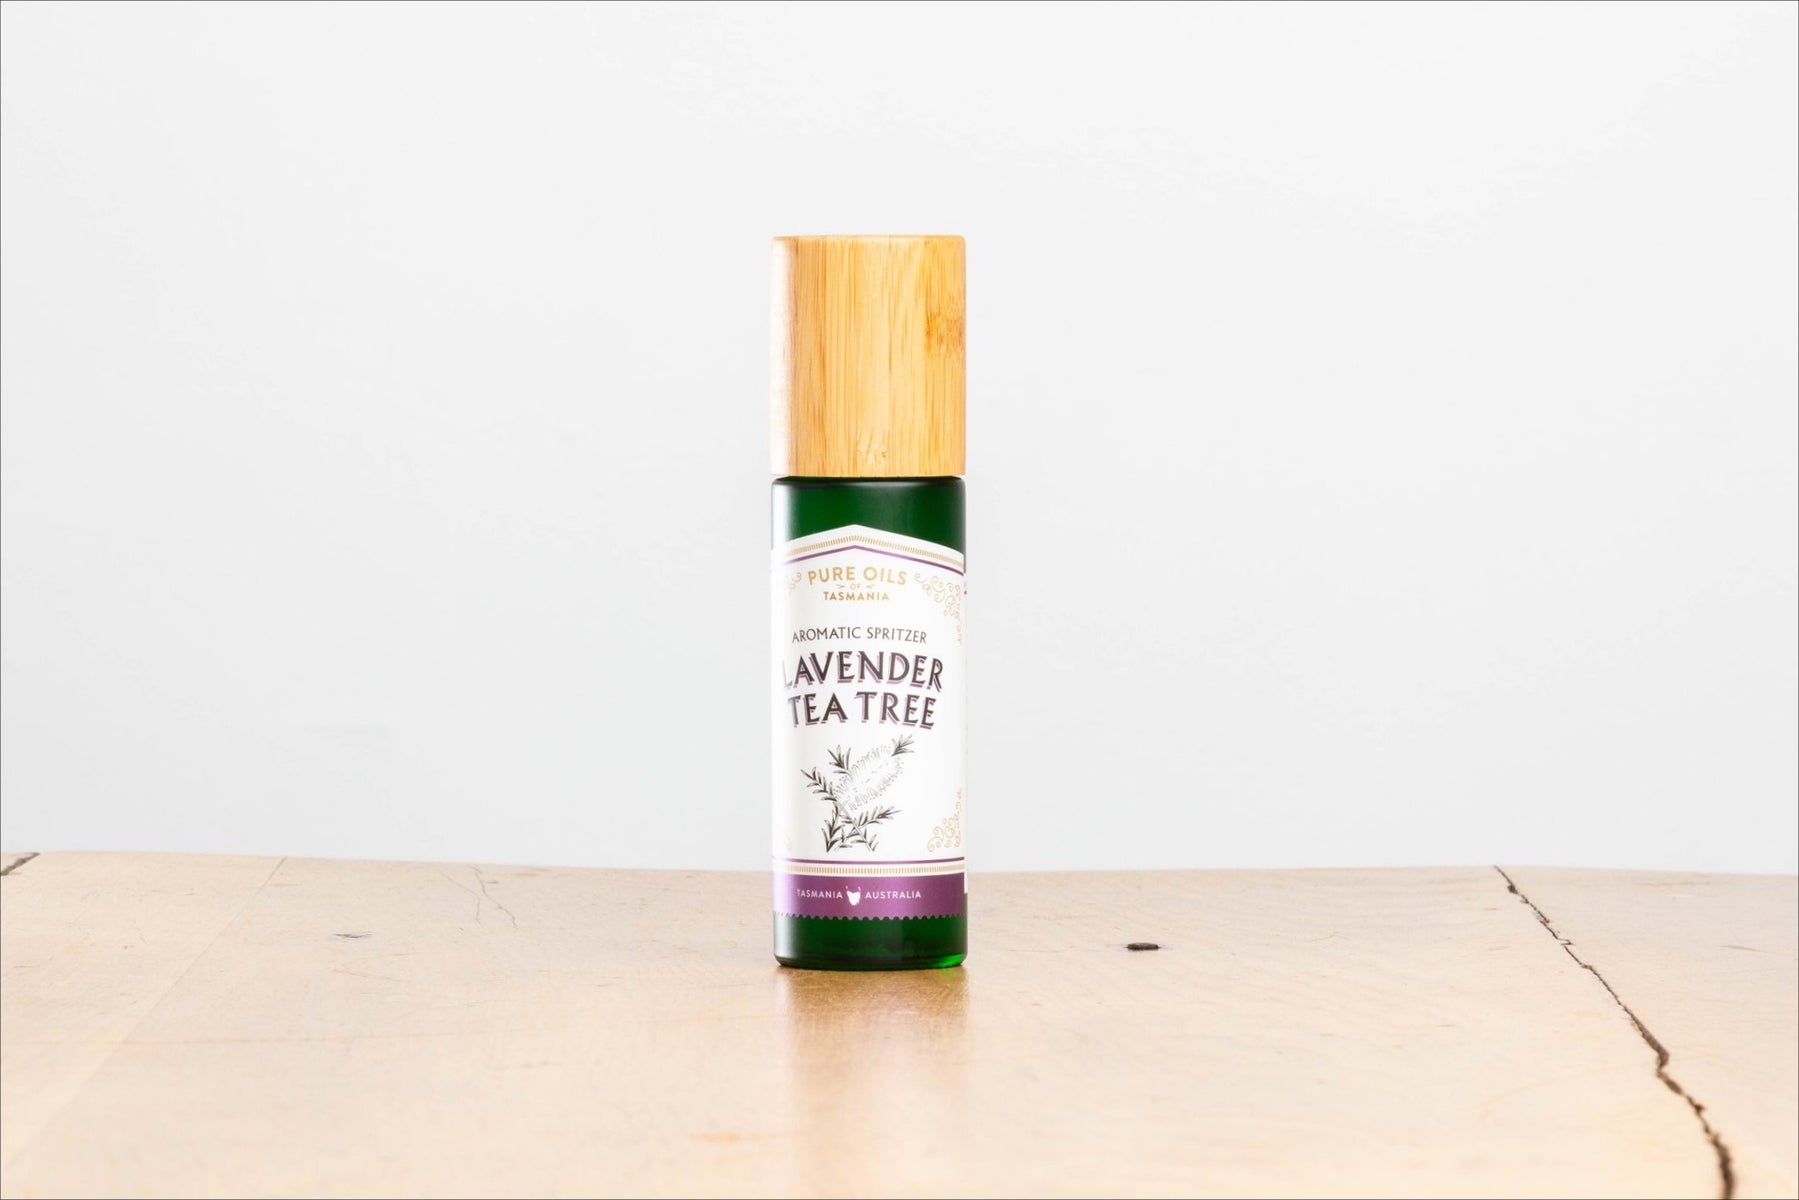 Lavender Tea Tree Aromatic Spritzer - Pure Oils of Tasmania Body pure oils tasmania 